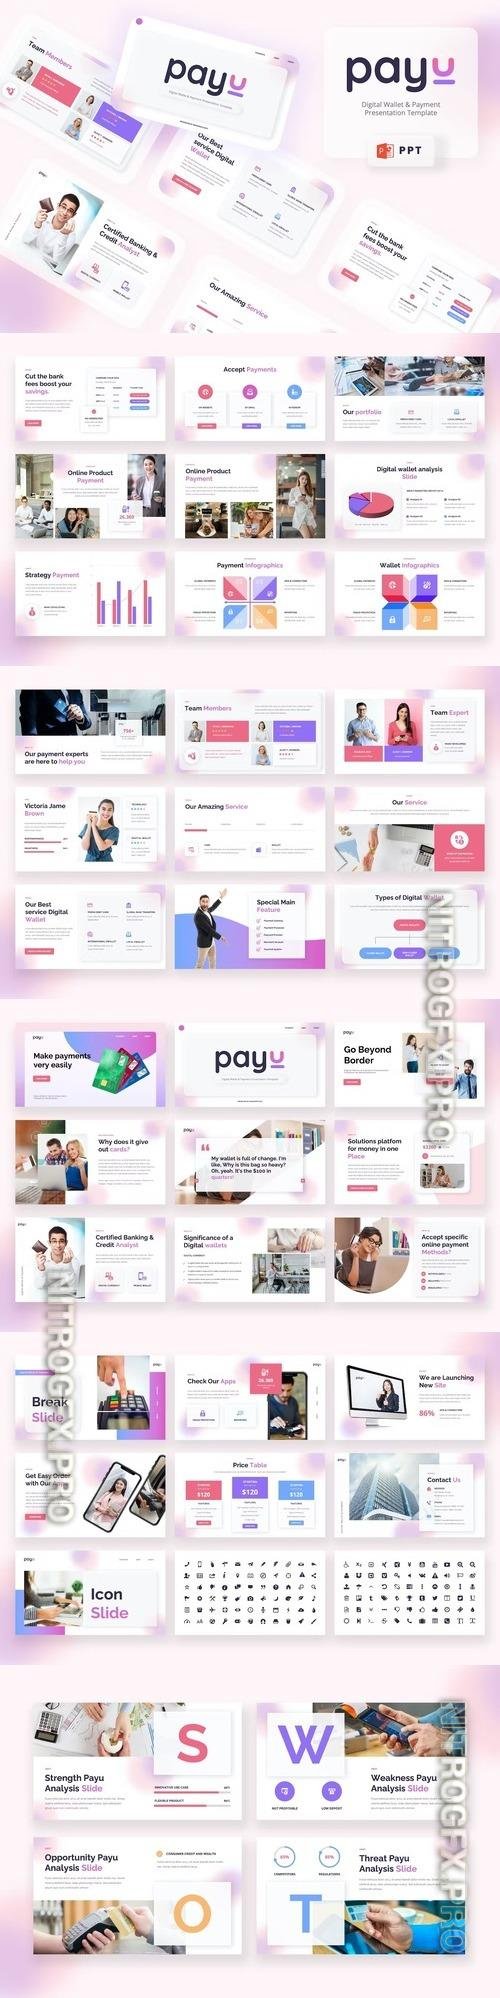 PAYU - Digital Wallet Powerpoint Template